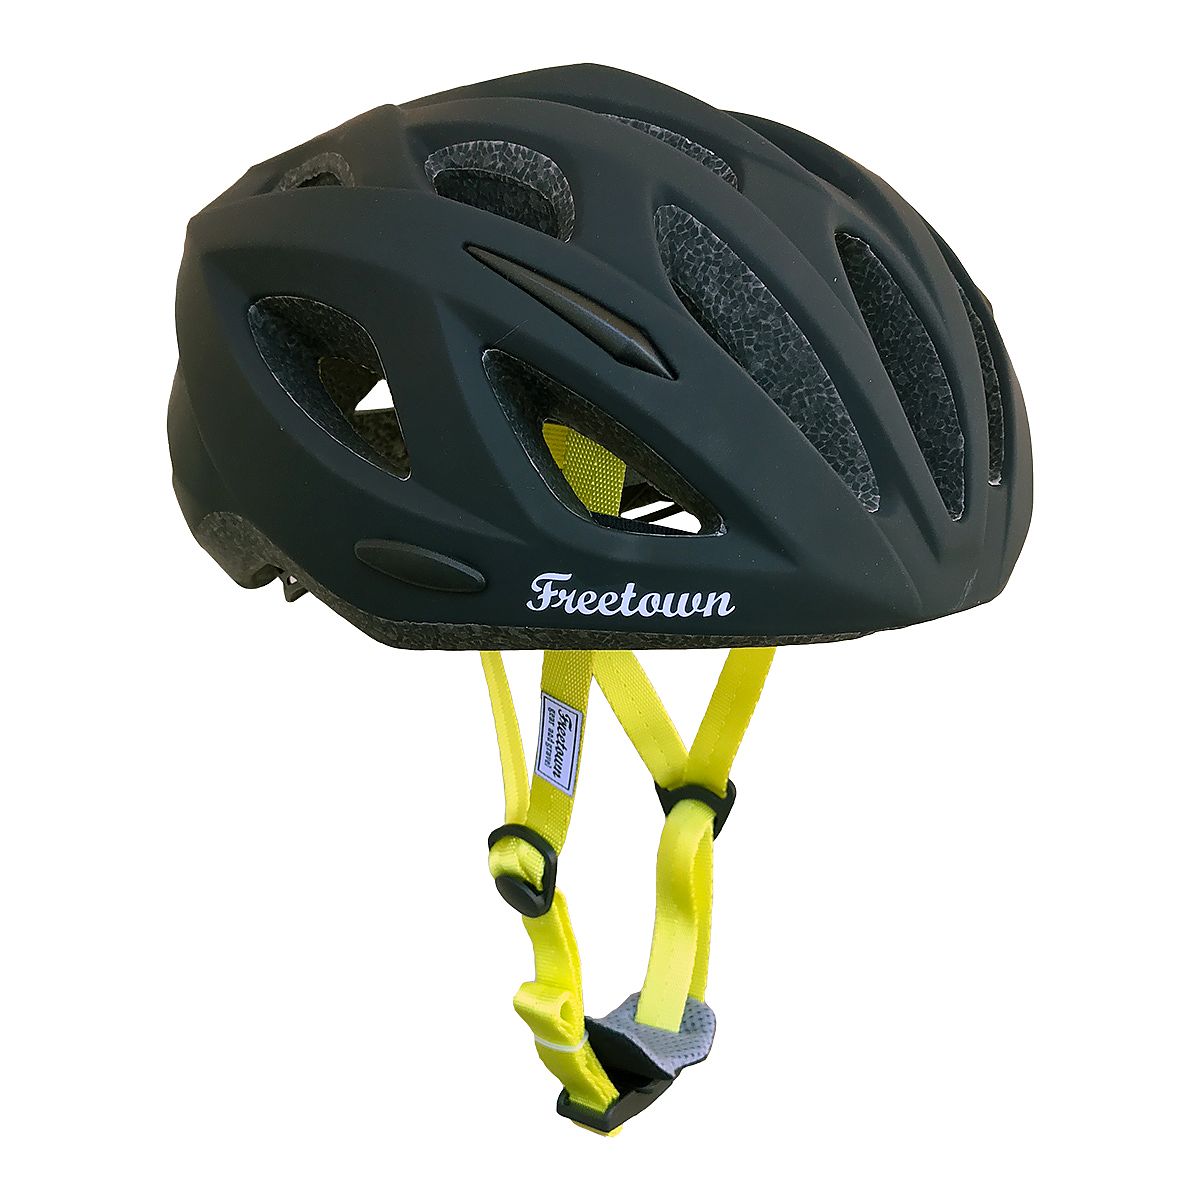 freetown bike helmet